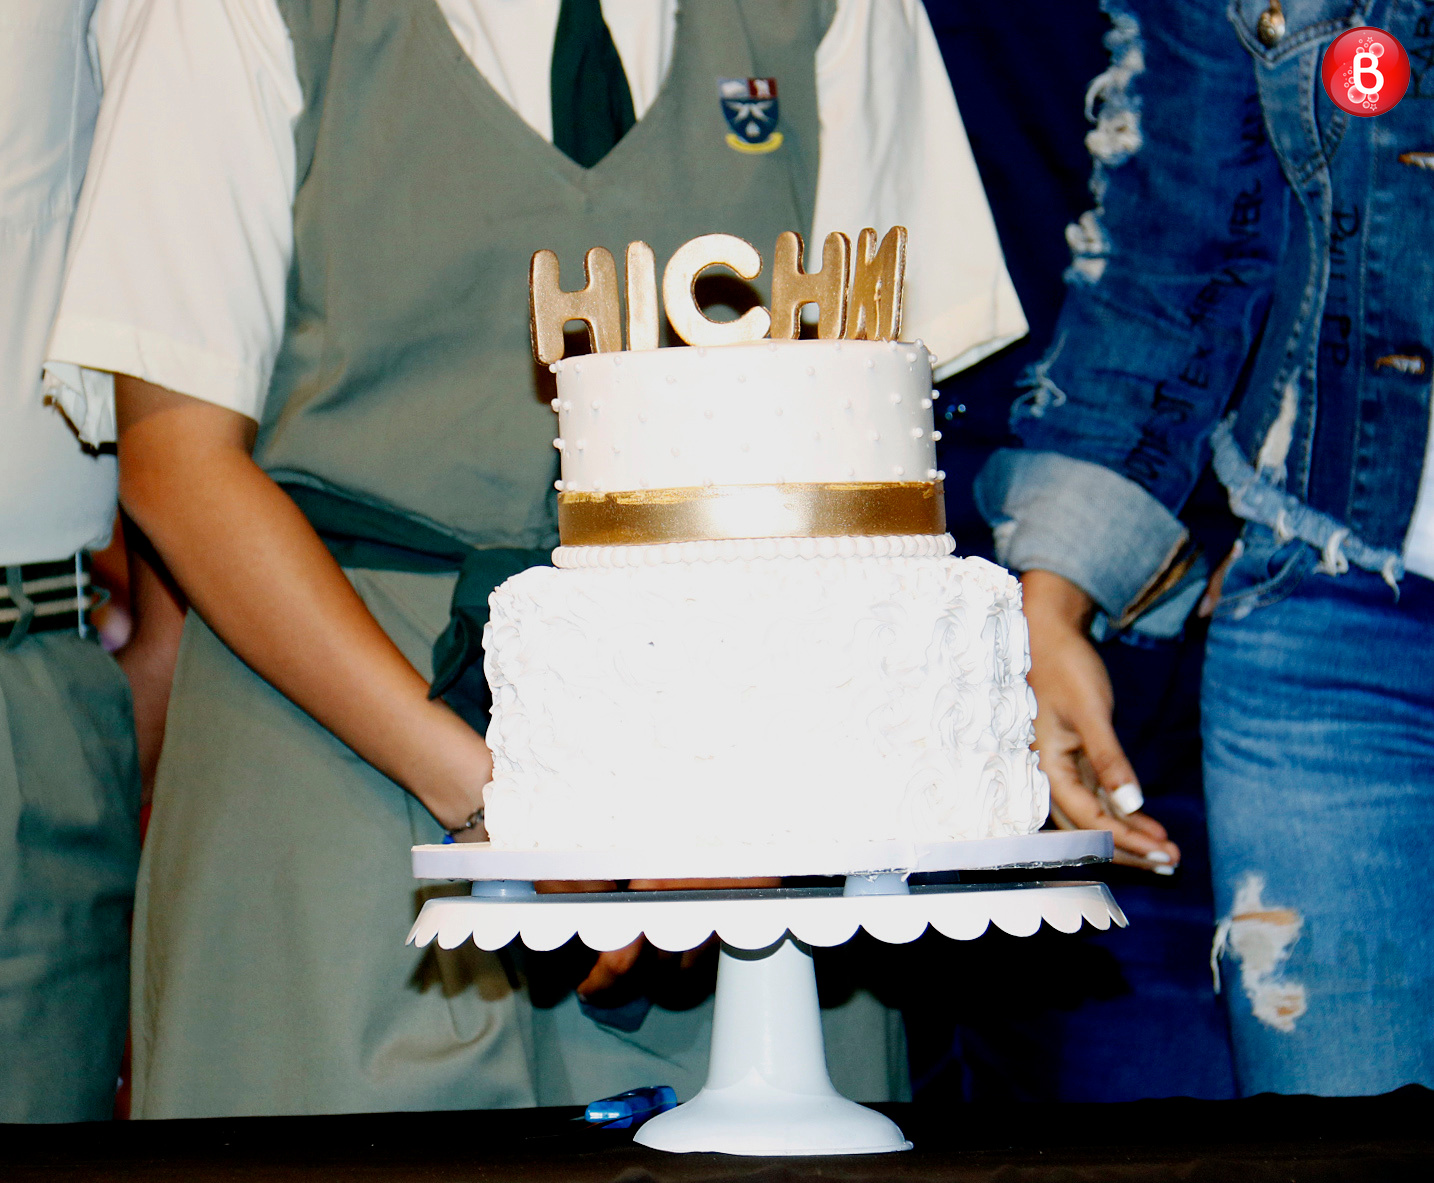 The ‘Hichki’ cake